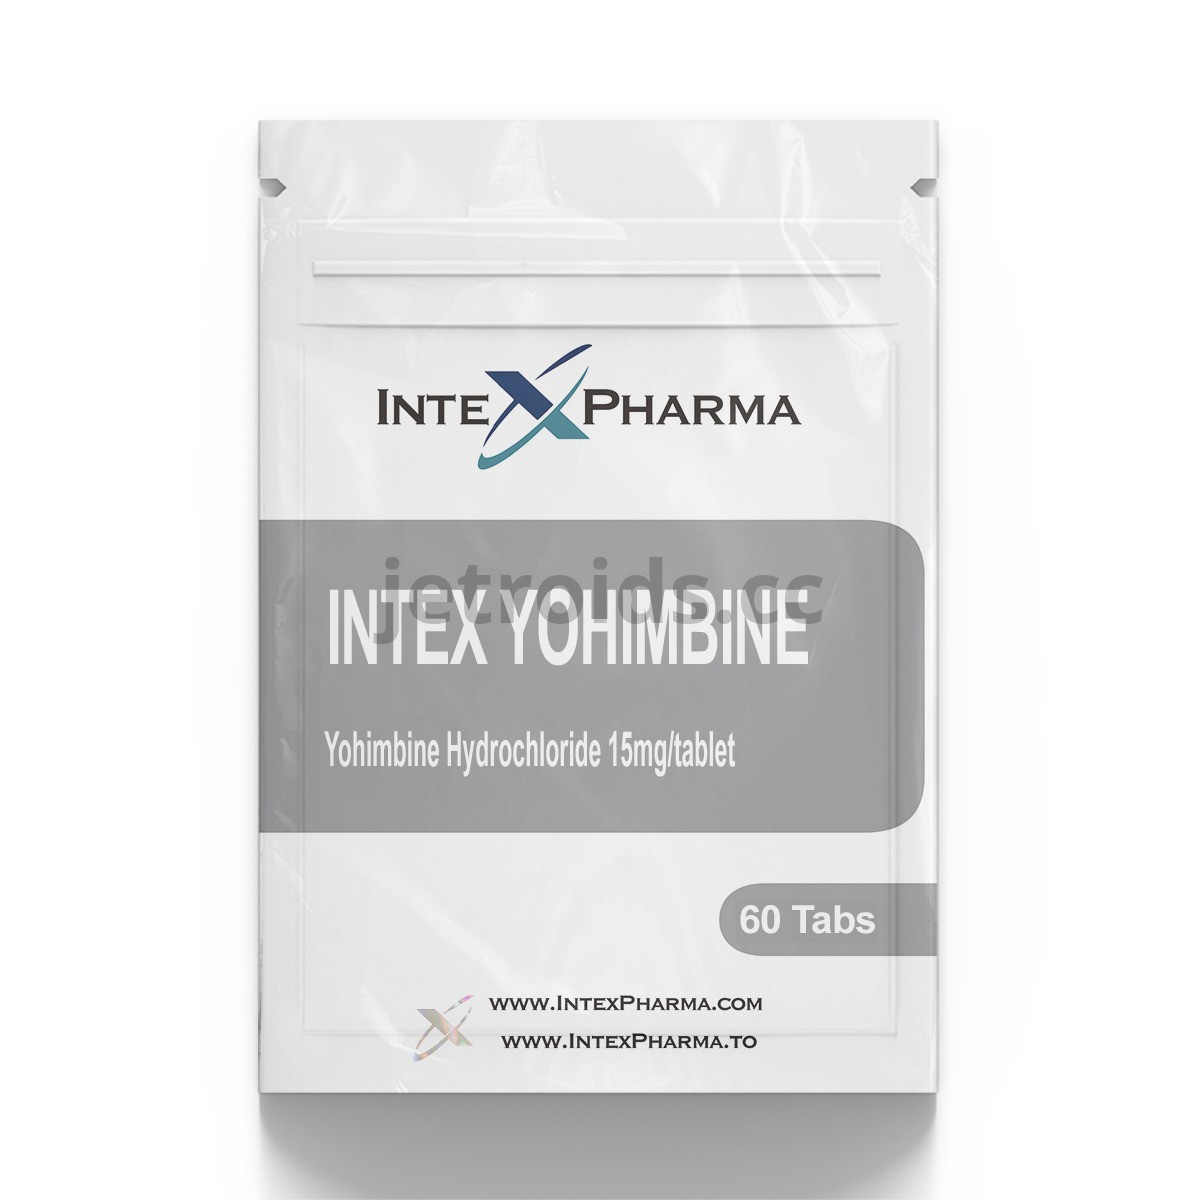 IntexPharma Intex Yohimbine Product Info